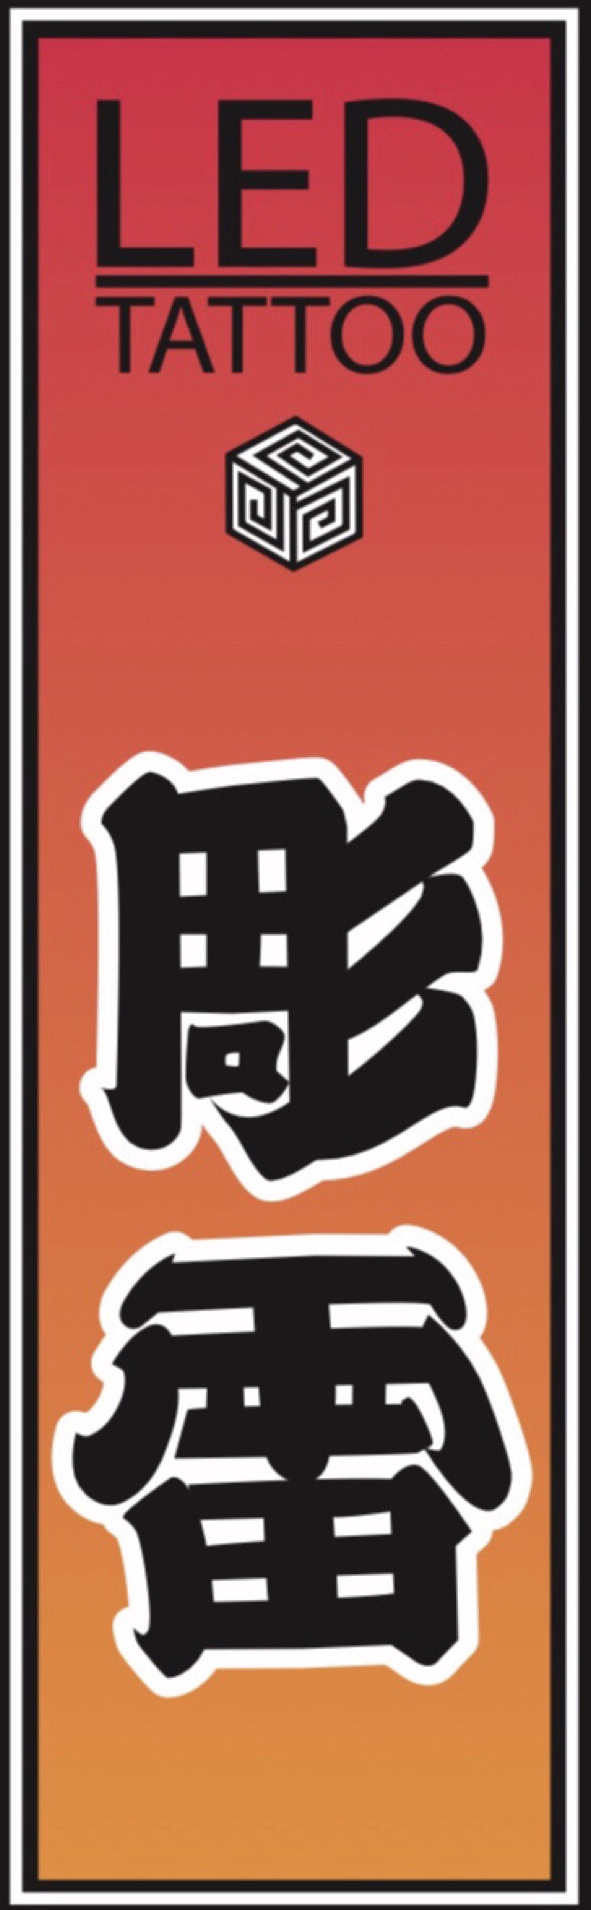 Logo.jpeg